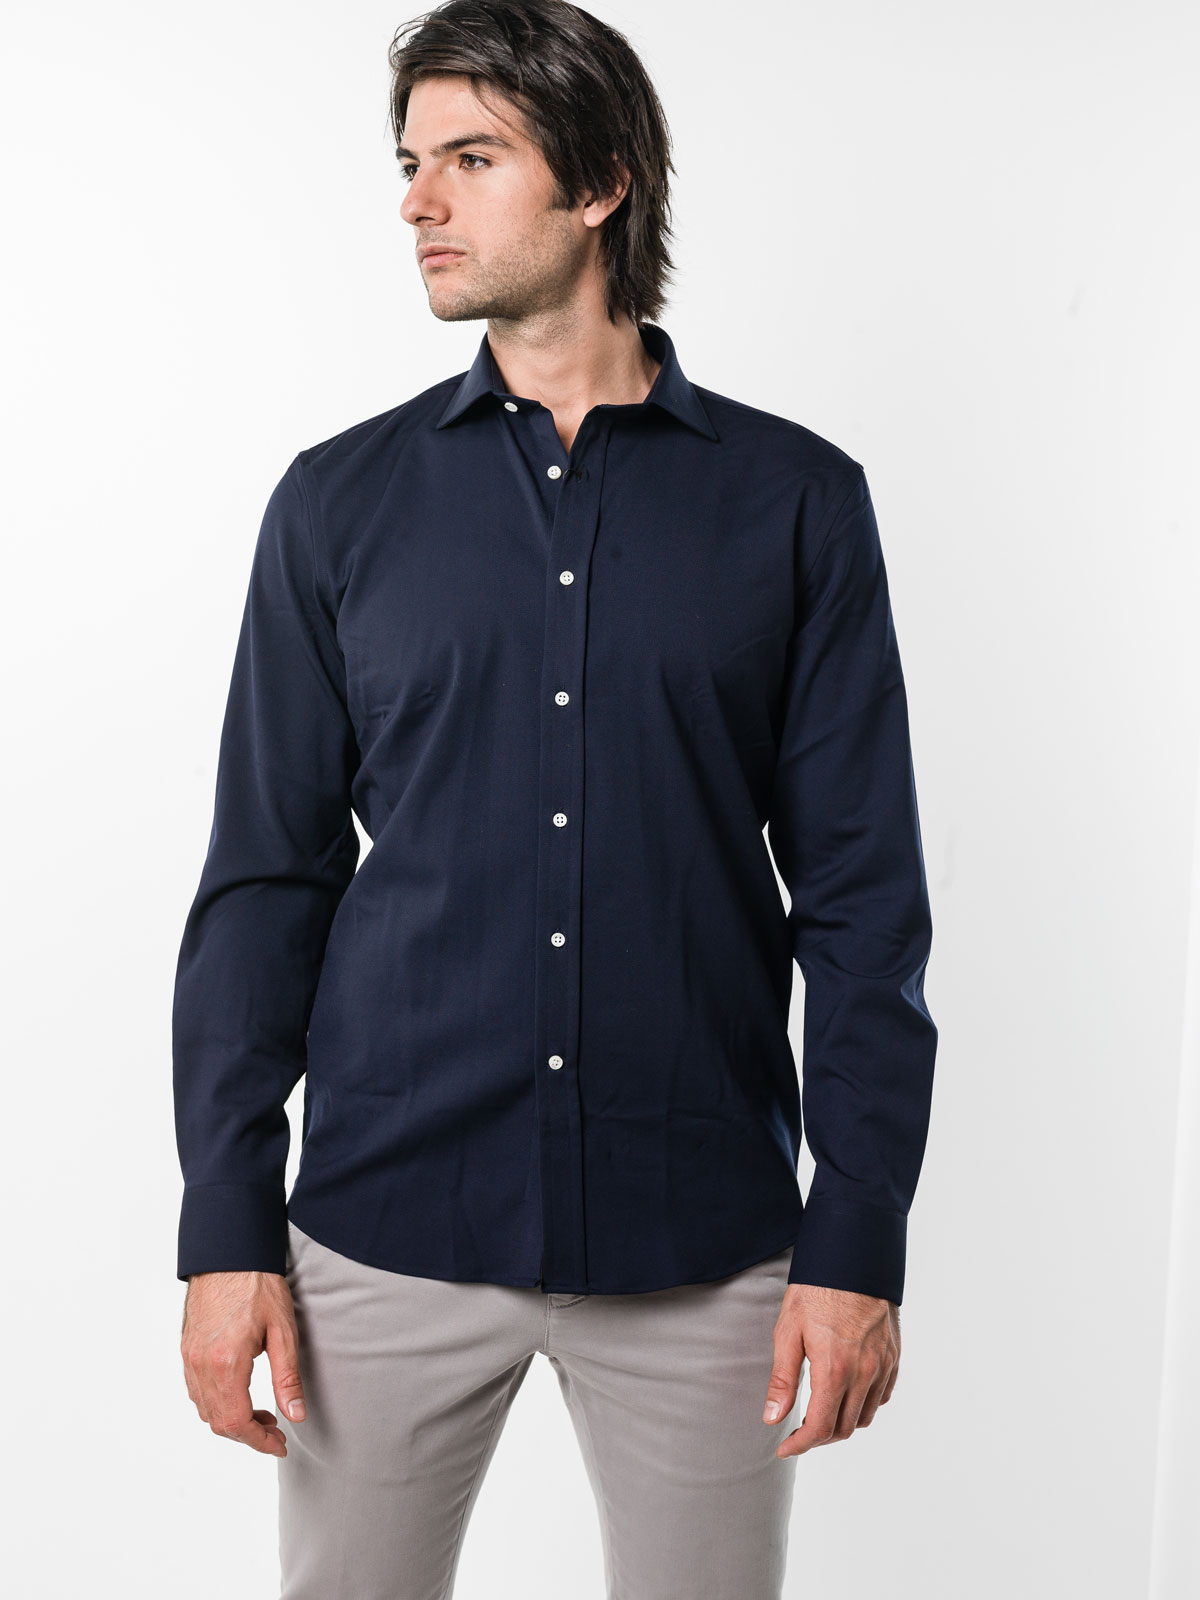 operador Conceder Cenagal Camisas Ralph Lauren Black Label - Camisa Azul Oscuro Para Hombre -  U02BD009BA394A49NY